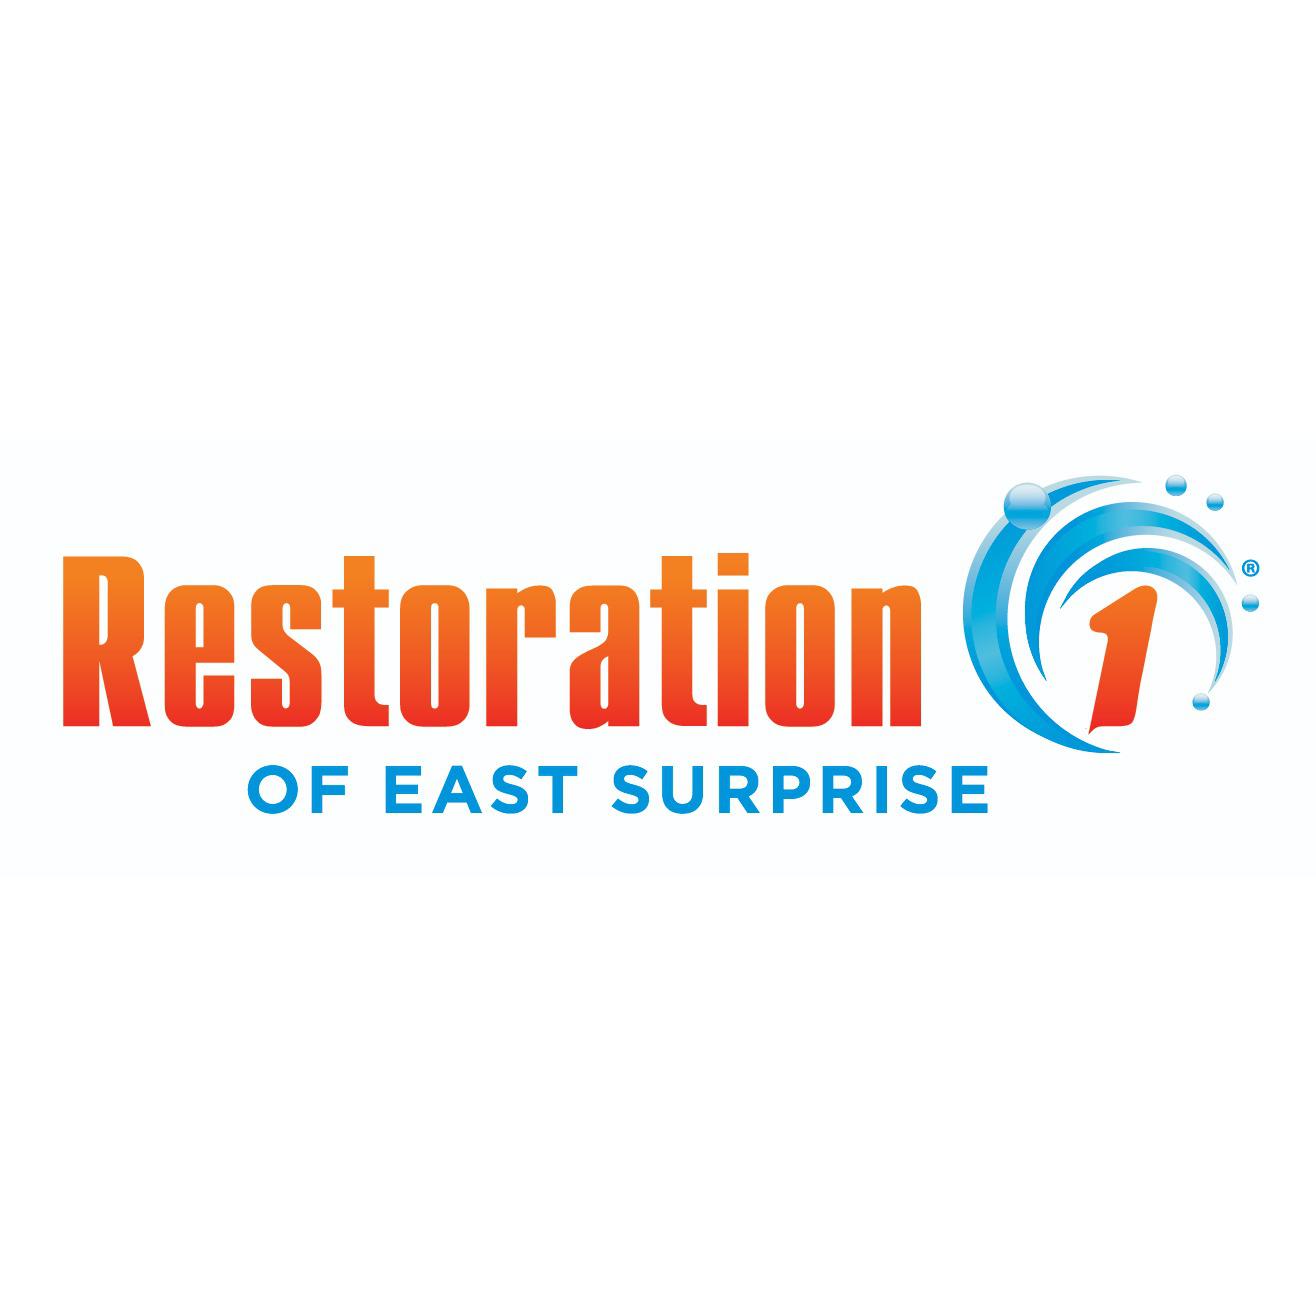 Restoration 1 of East Surprise